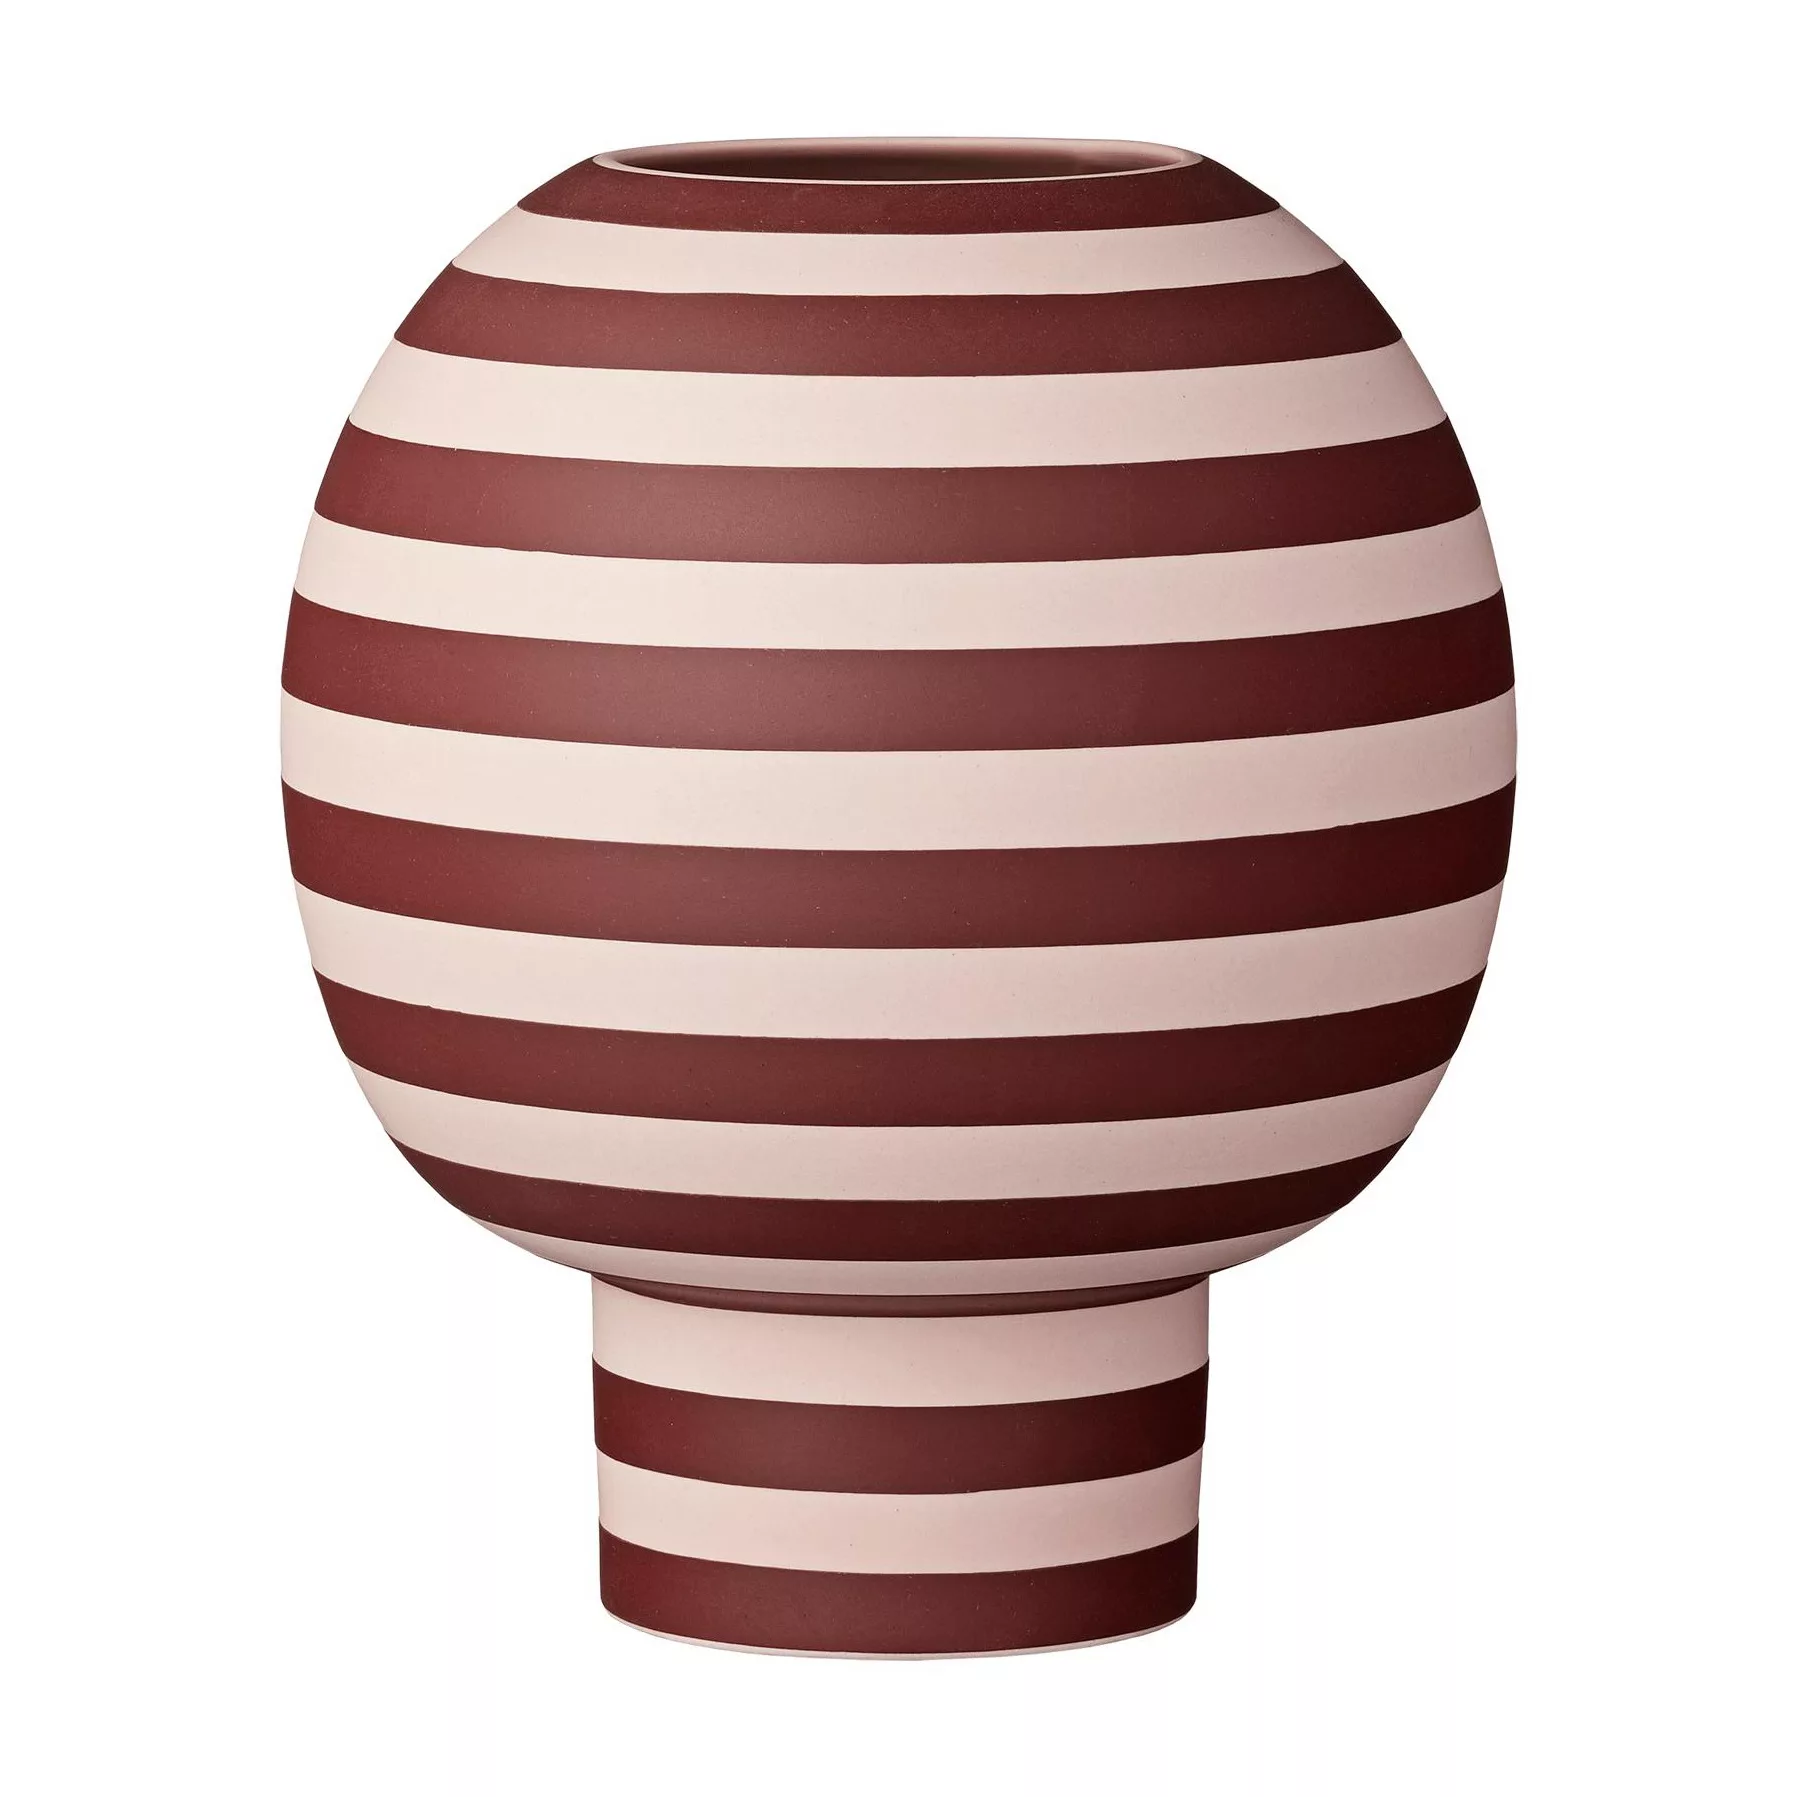 AYTM - Varia Vase H 21cm - rose, bordeaux/H 21cm x Ø 18cm günstig online kaufen